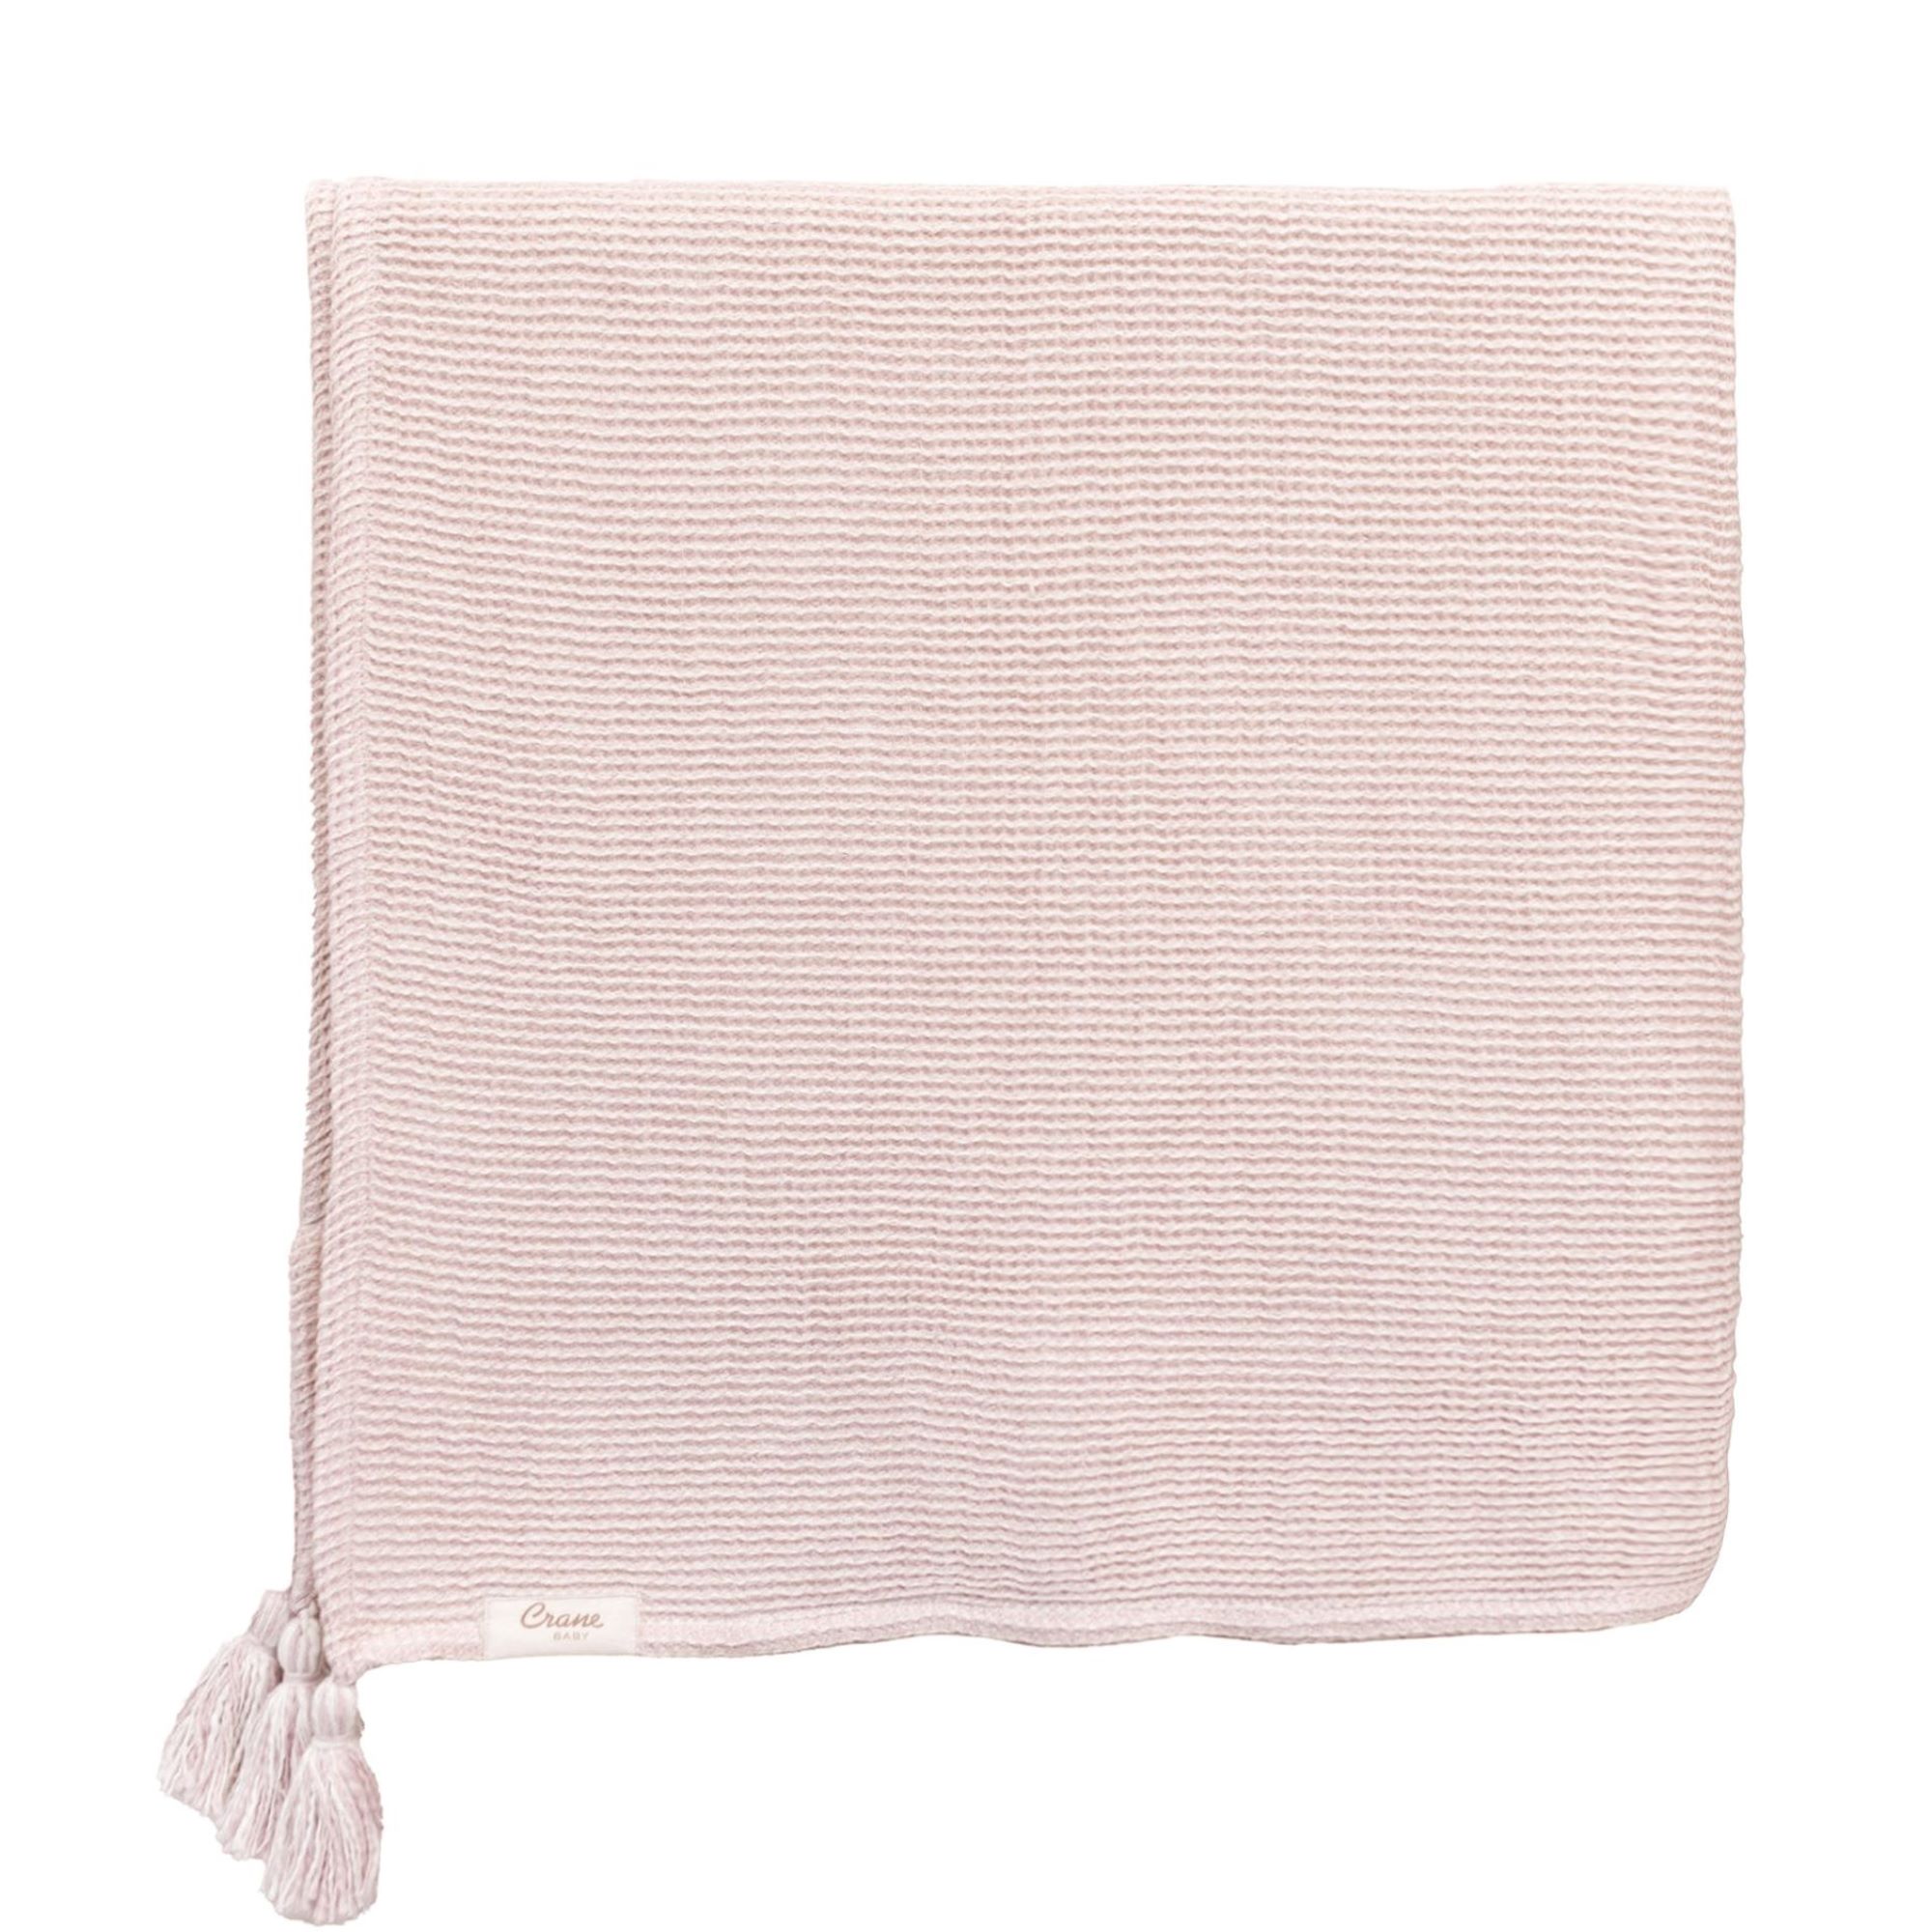 Pink blanket main image on white background